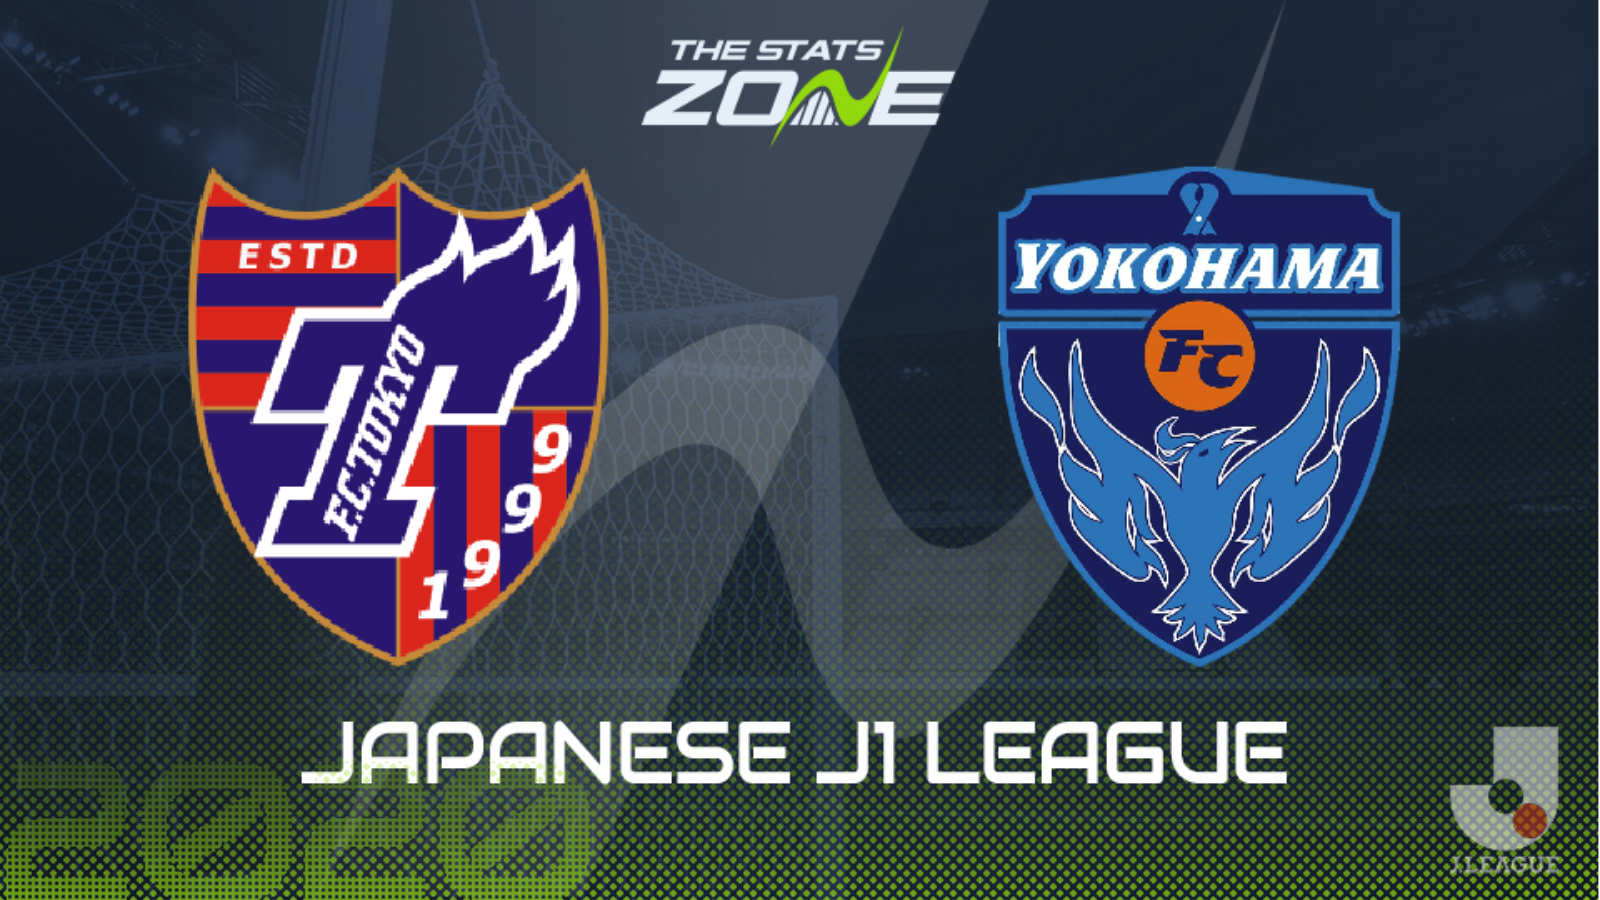 Japanese J1 League Fc Tokyo Vs Yokohama Preview Prediction The Stats Zone